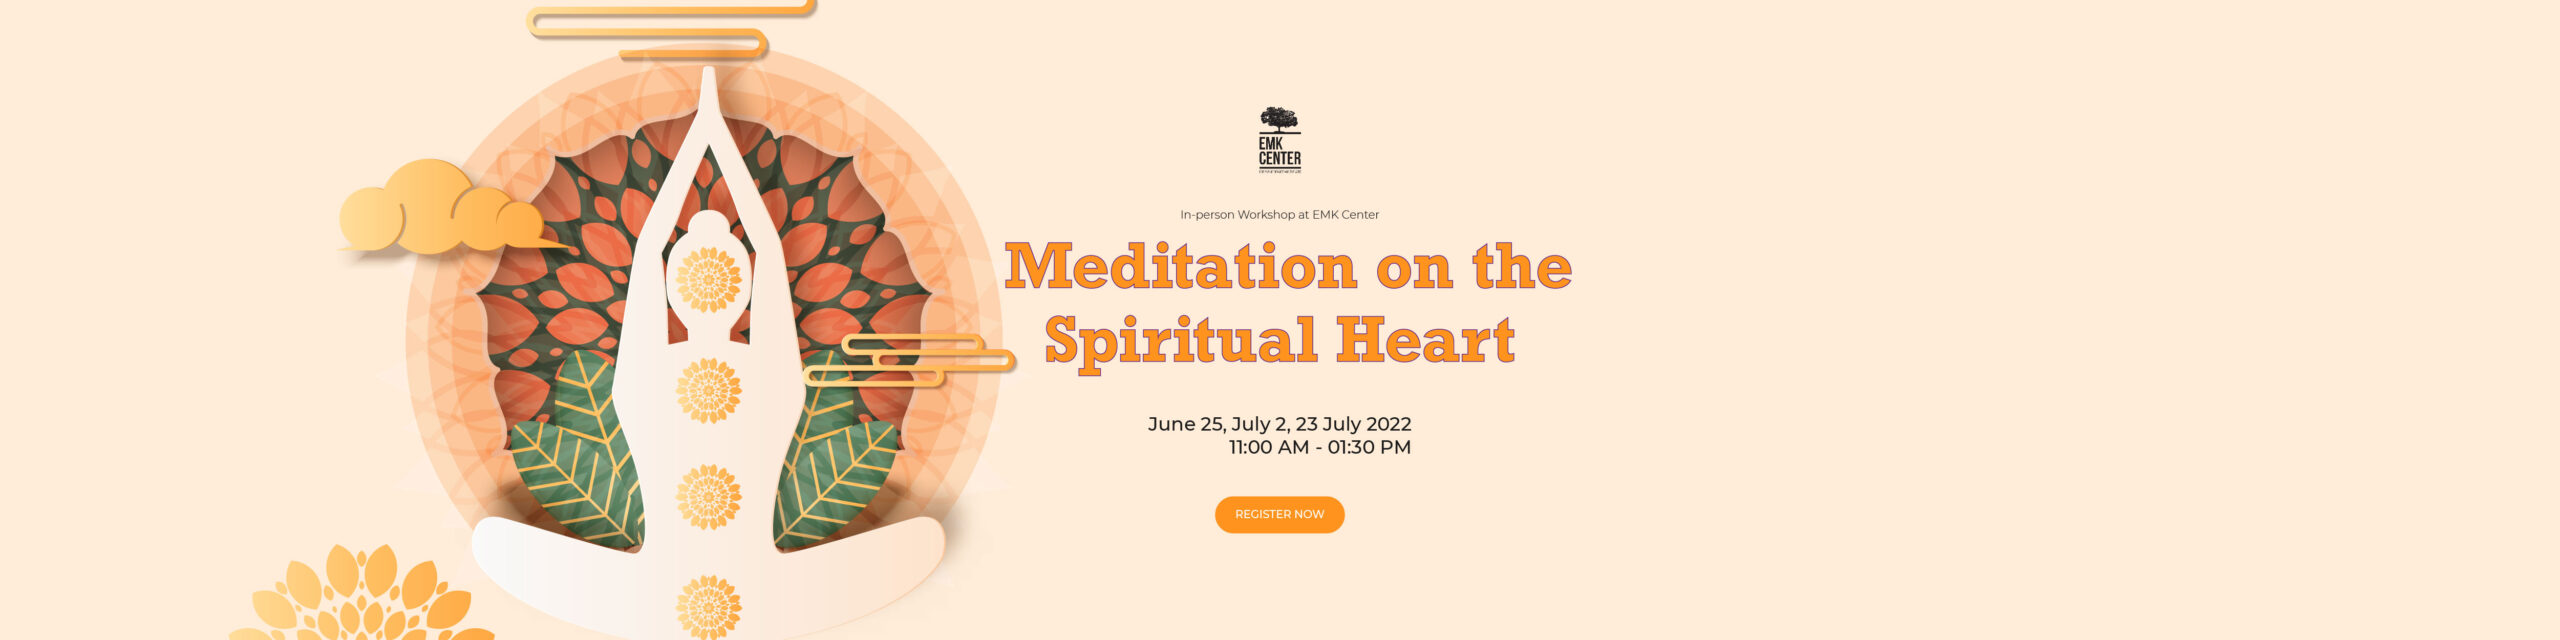 Meditation on the Spiritual Heart